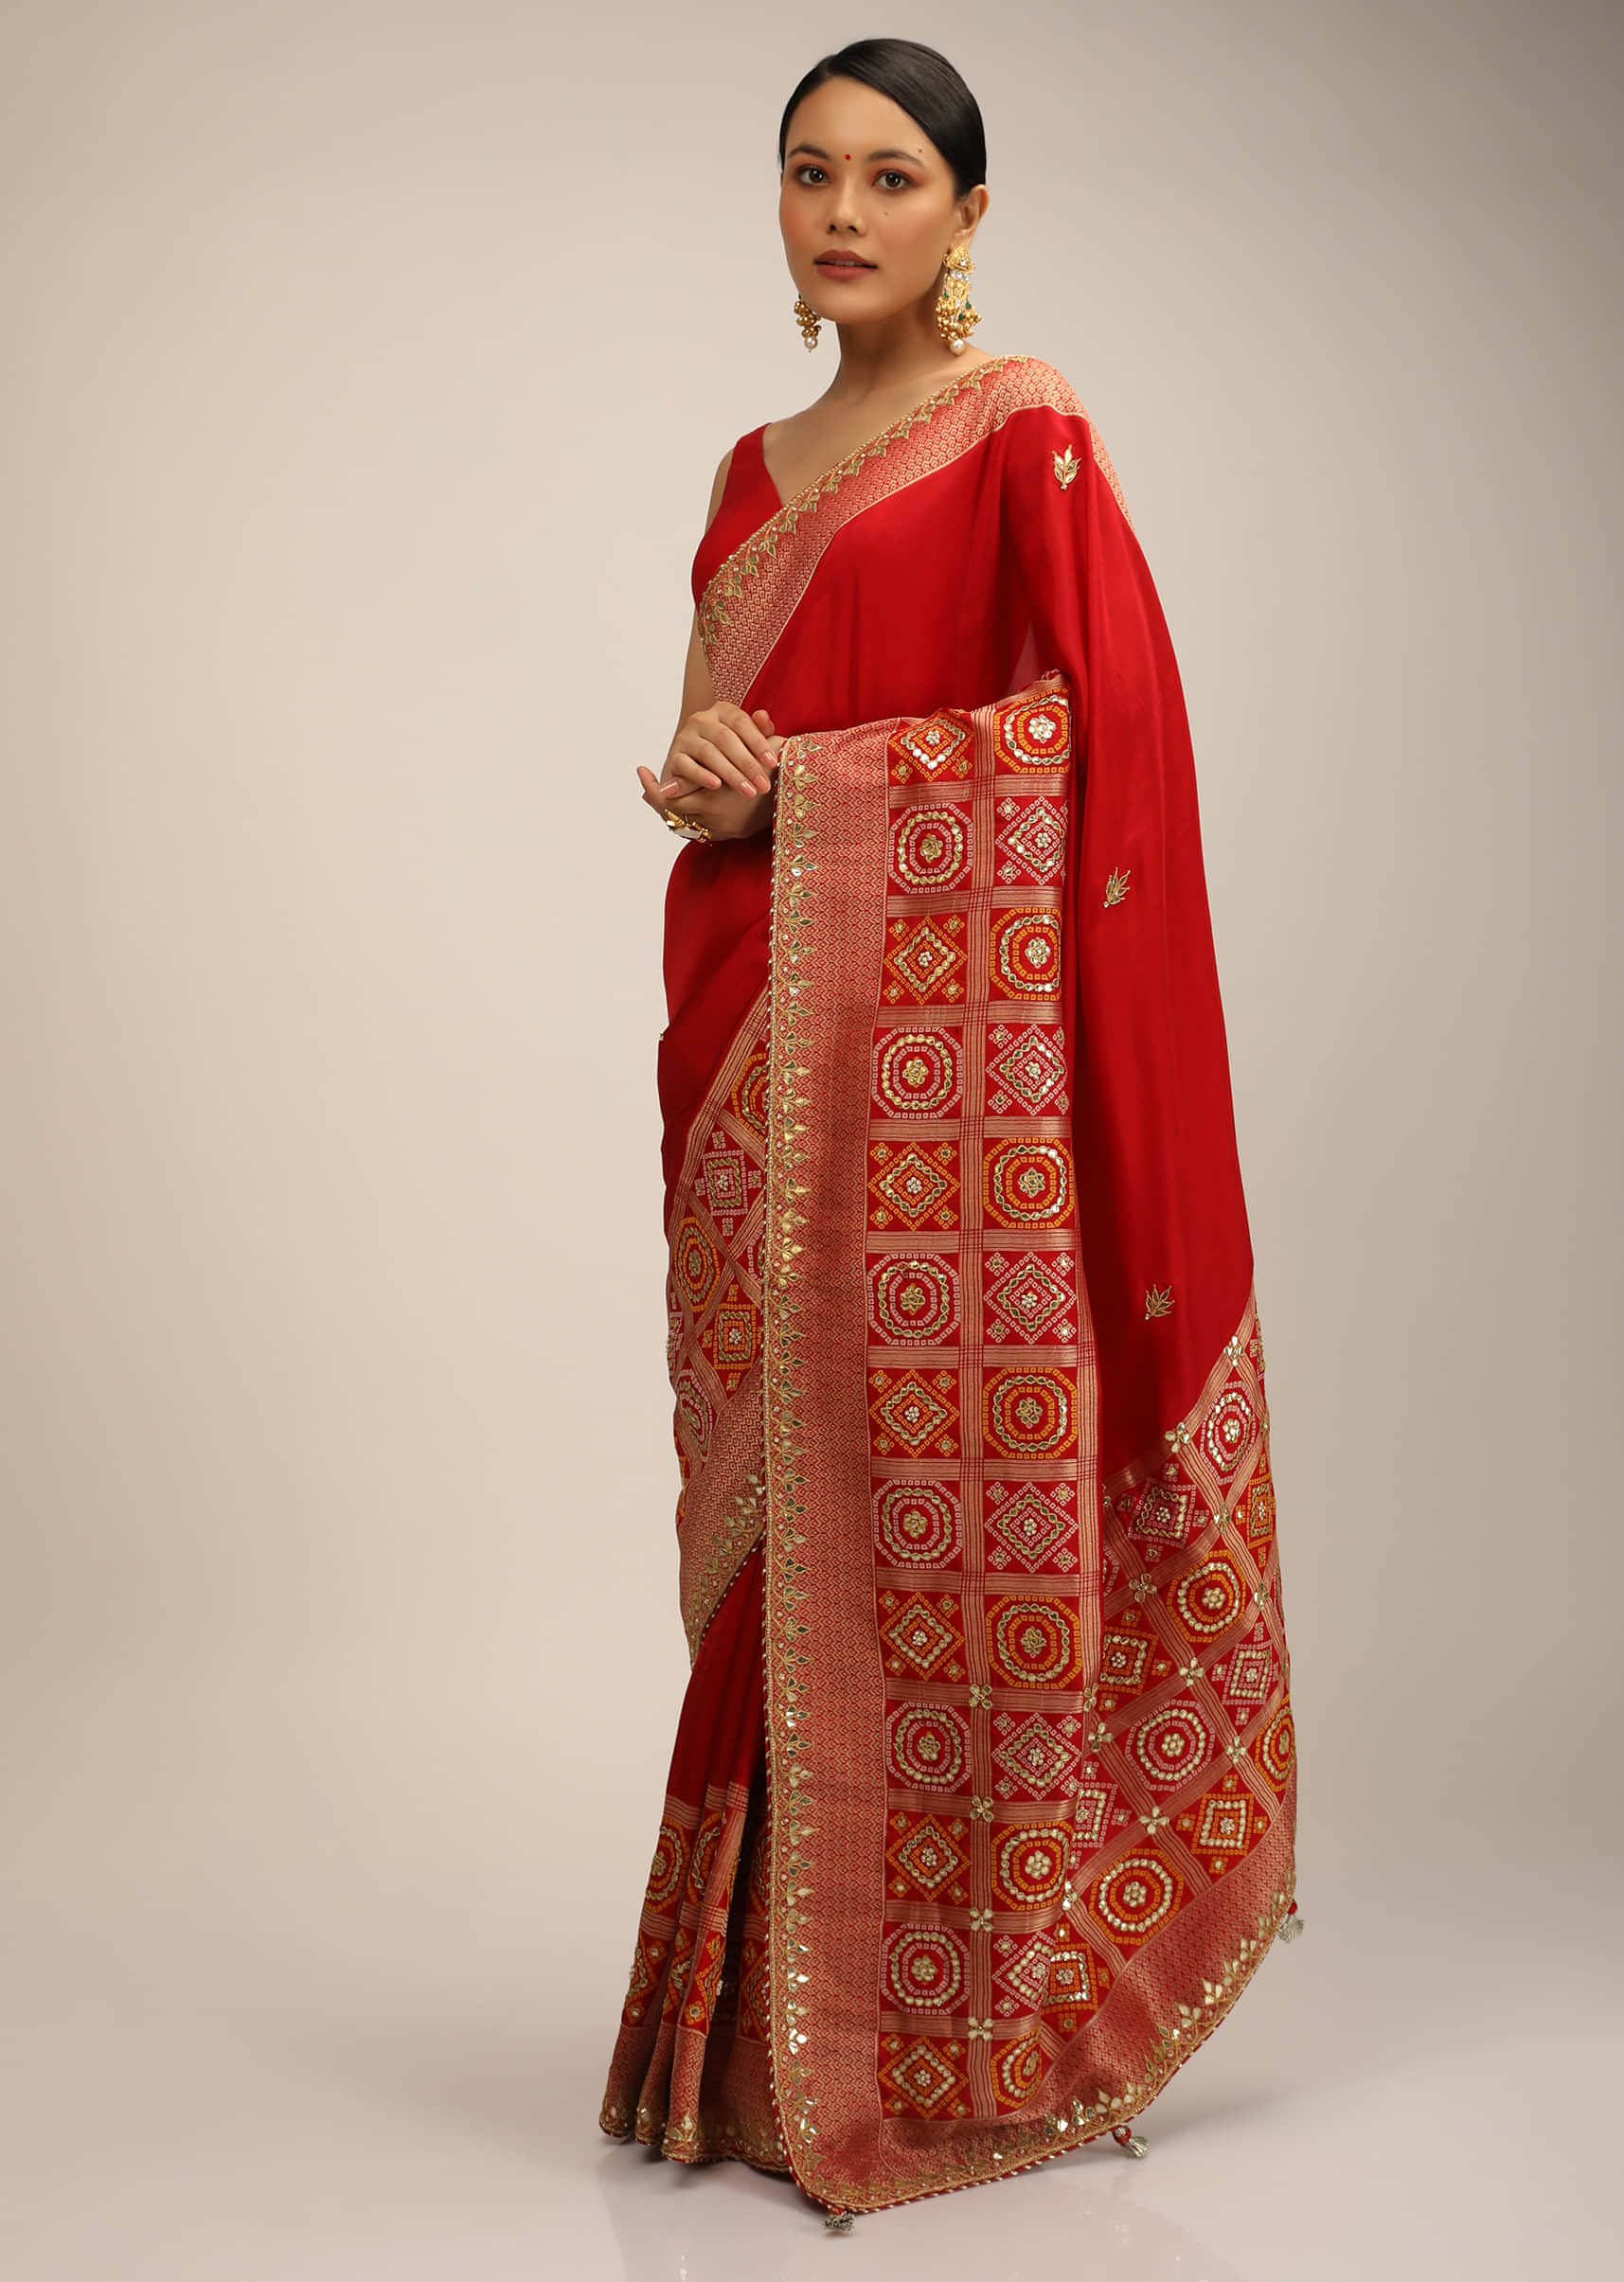 Apparelsonline Gold Sari Saree Stitched Petticoat Adjustable waist 